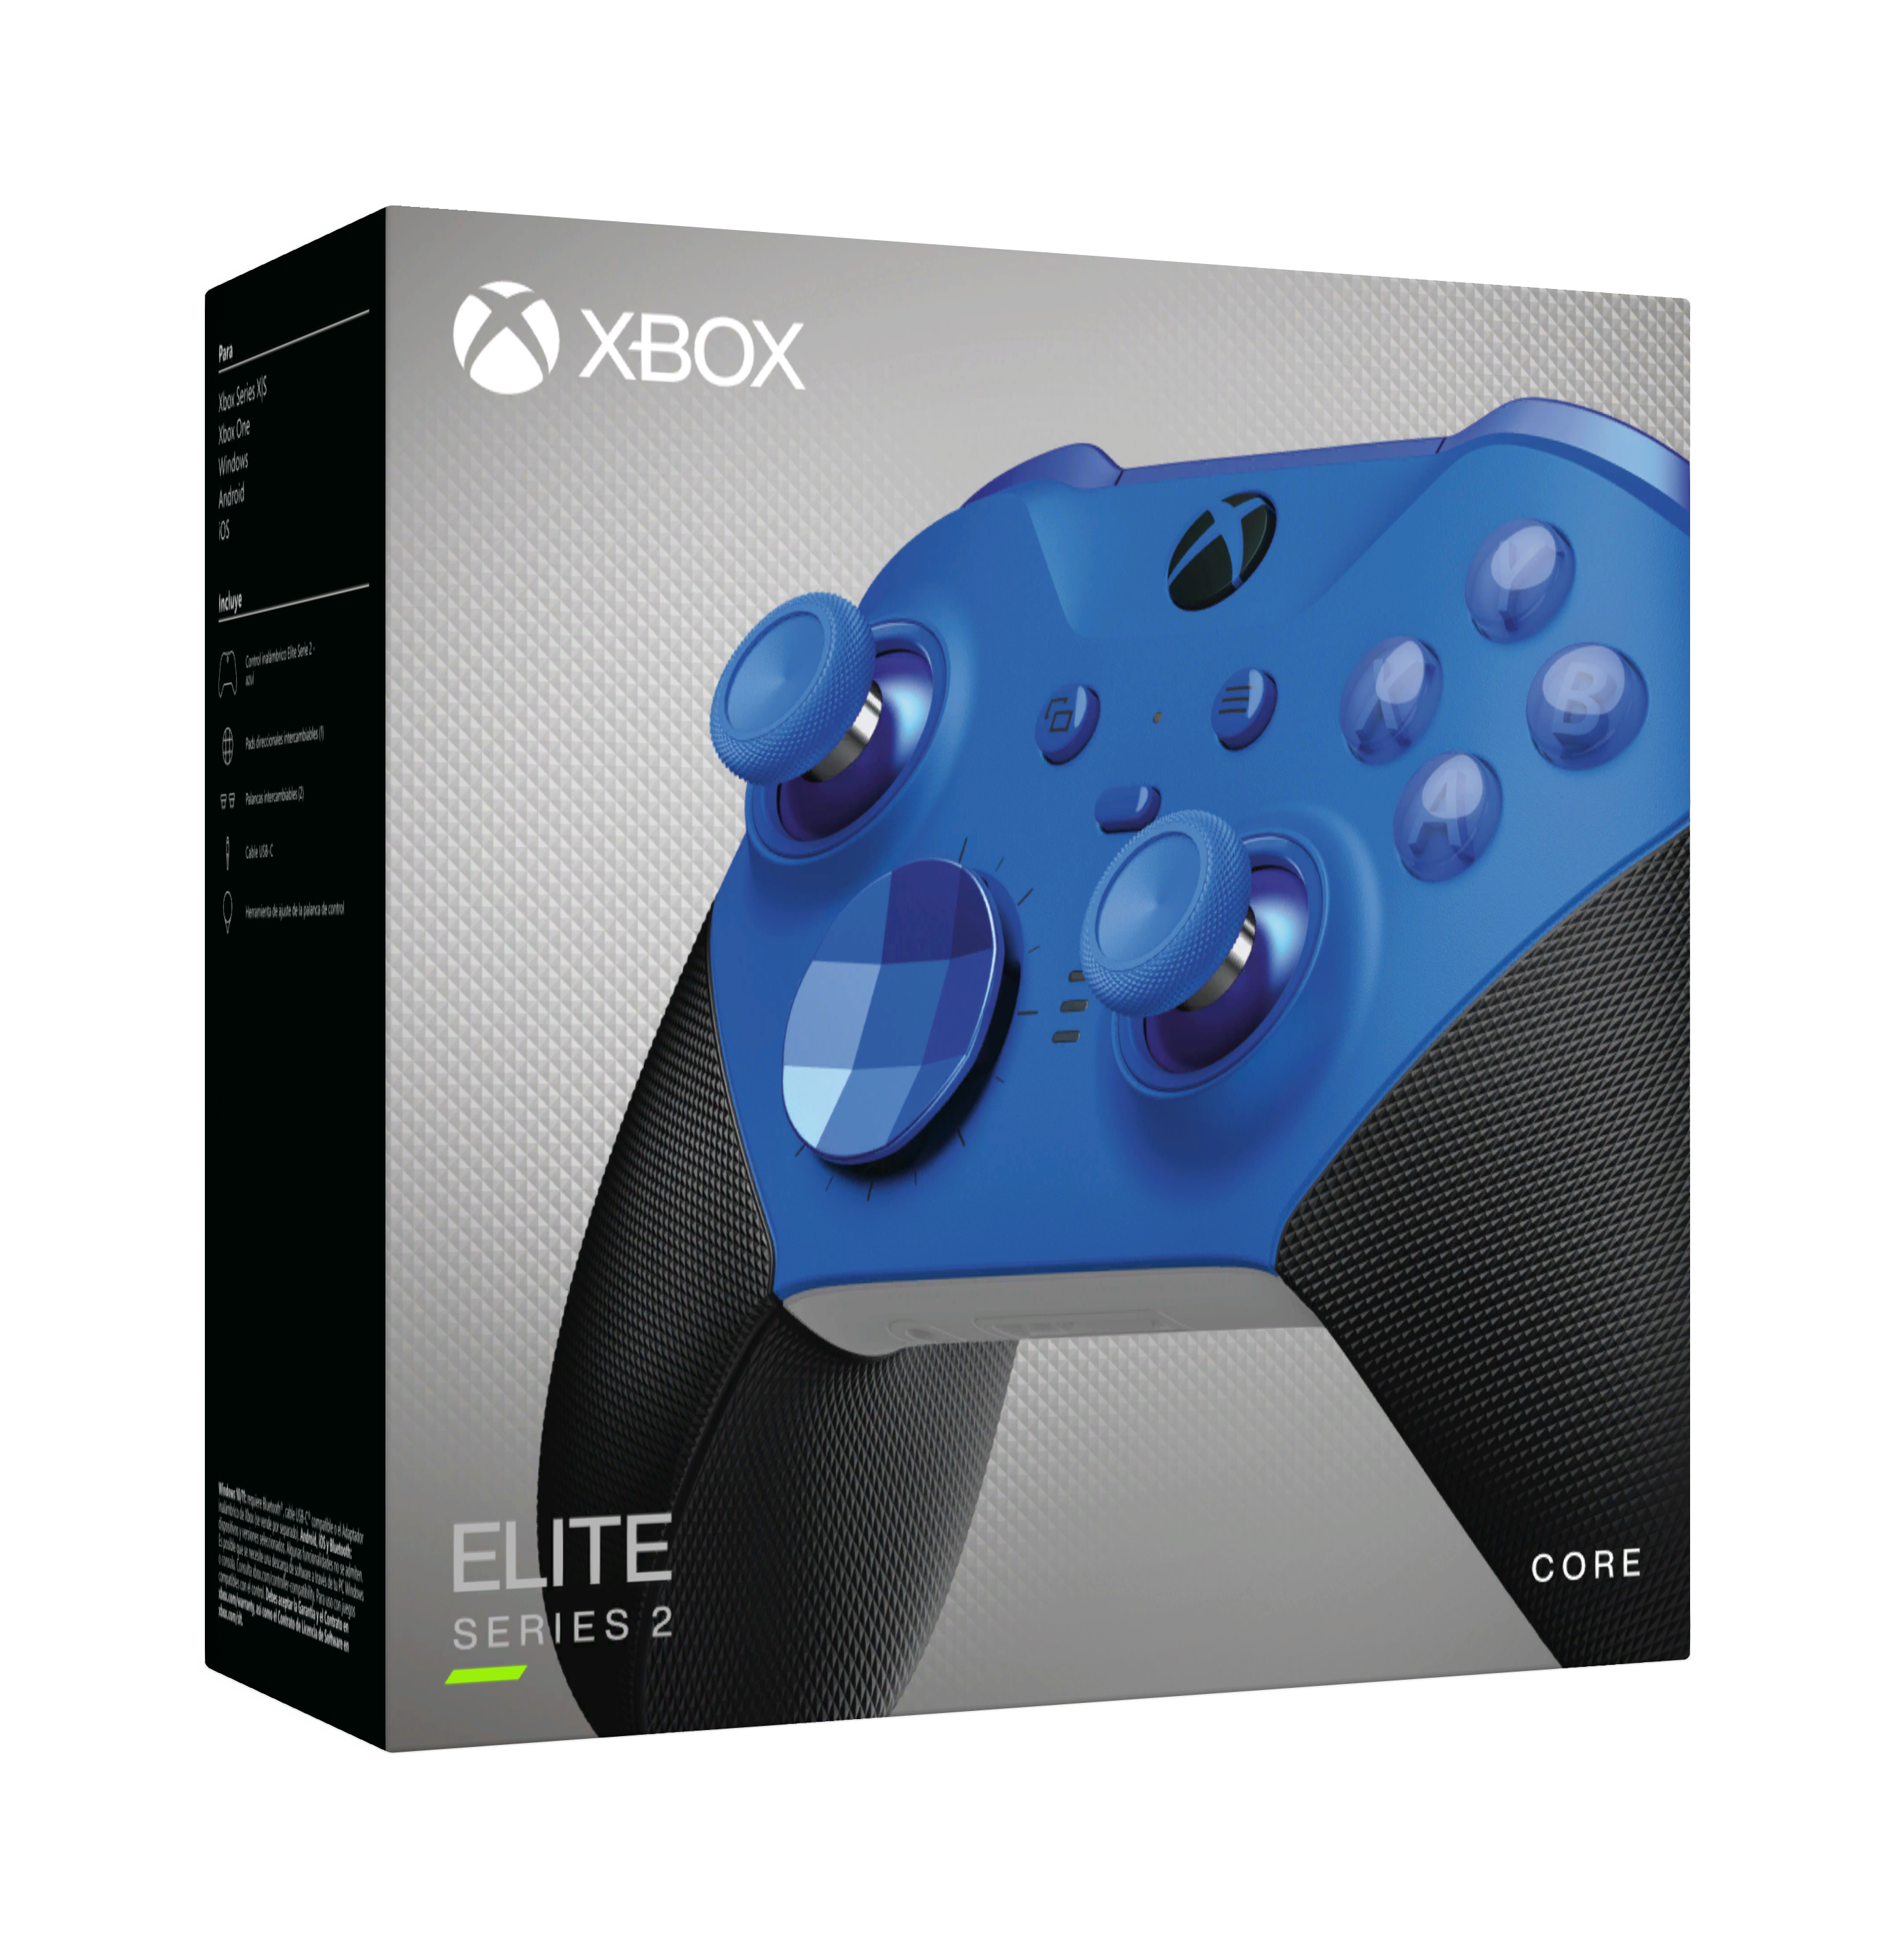  Xbox Elite Series 2 Core Wireless Gaming Controller